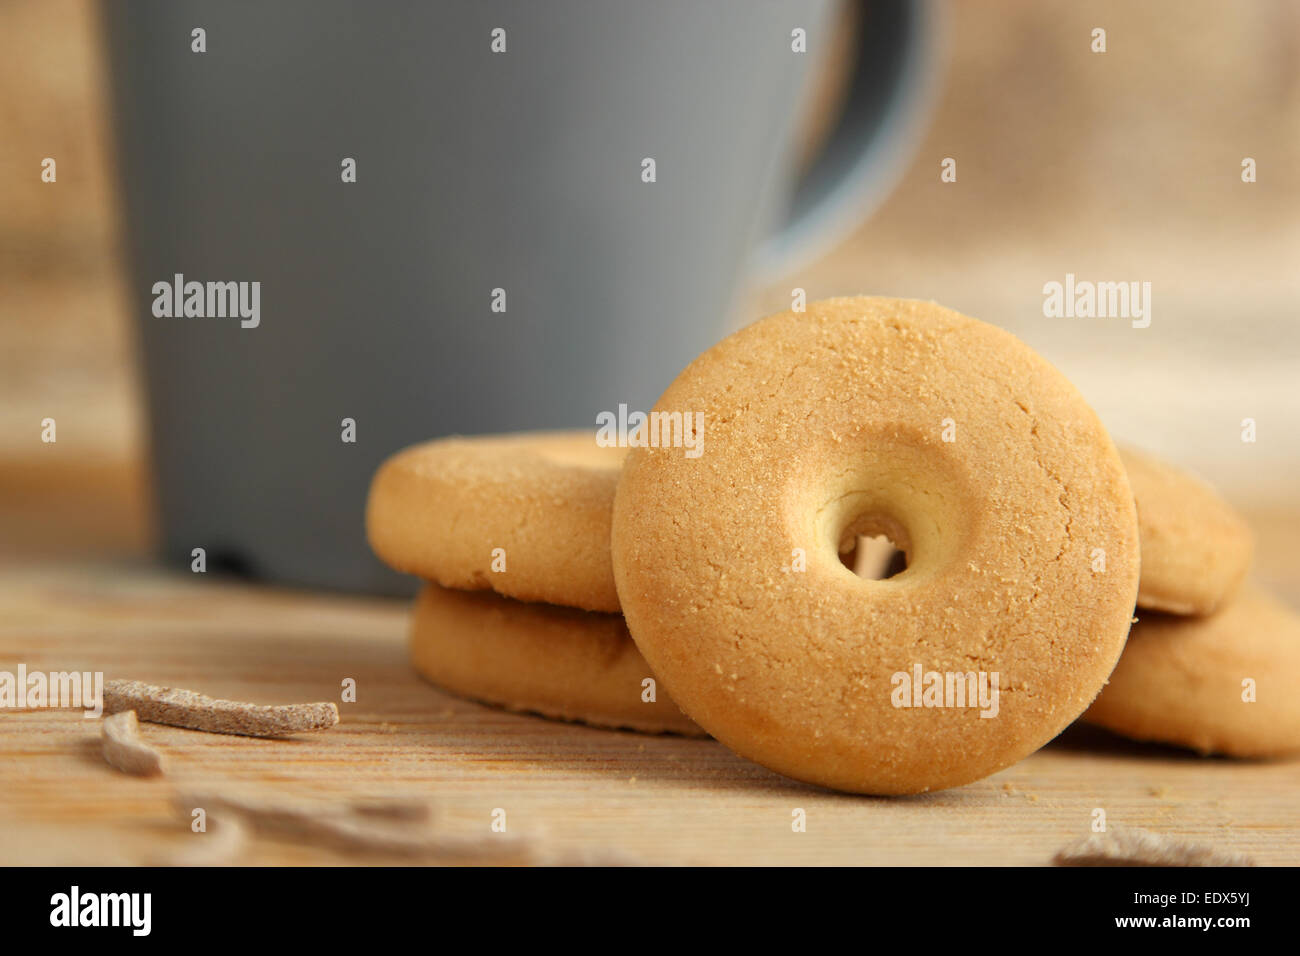 Bimby hi-res stock photography and images - Alamy